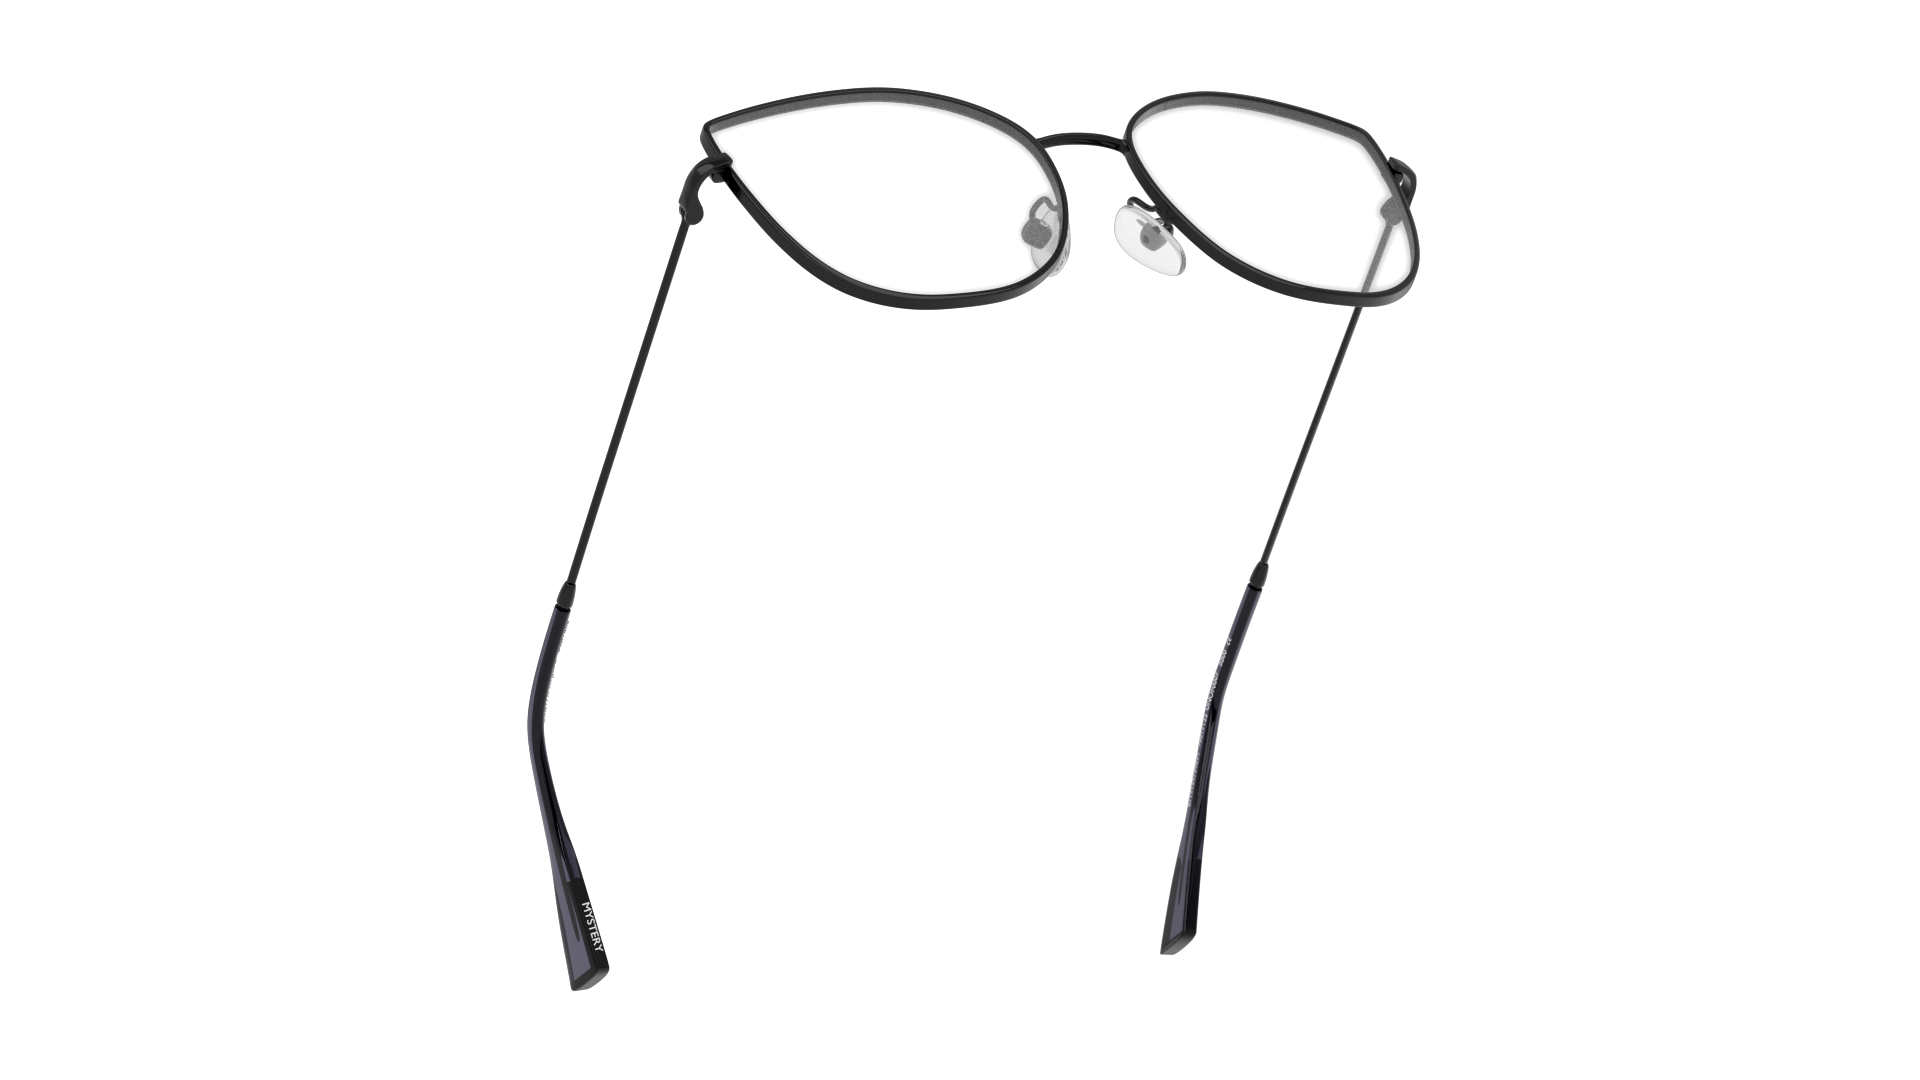 Bottom_Up Unofficial UNOF0007 Glasses Transparent / Black